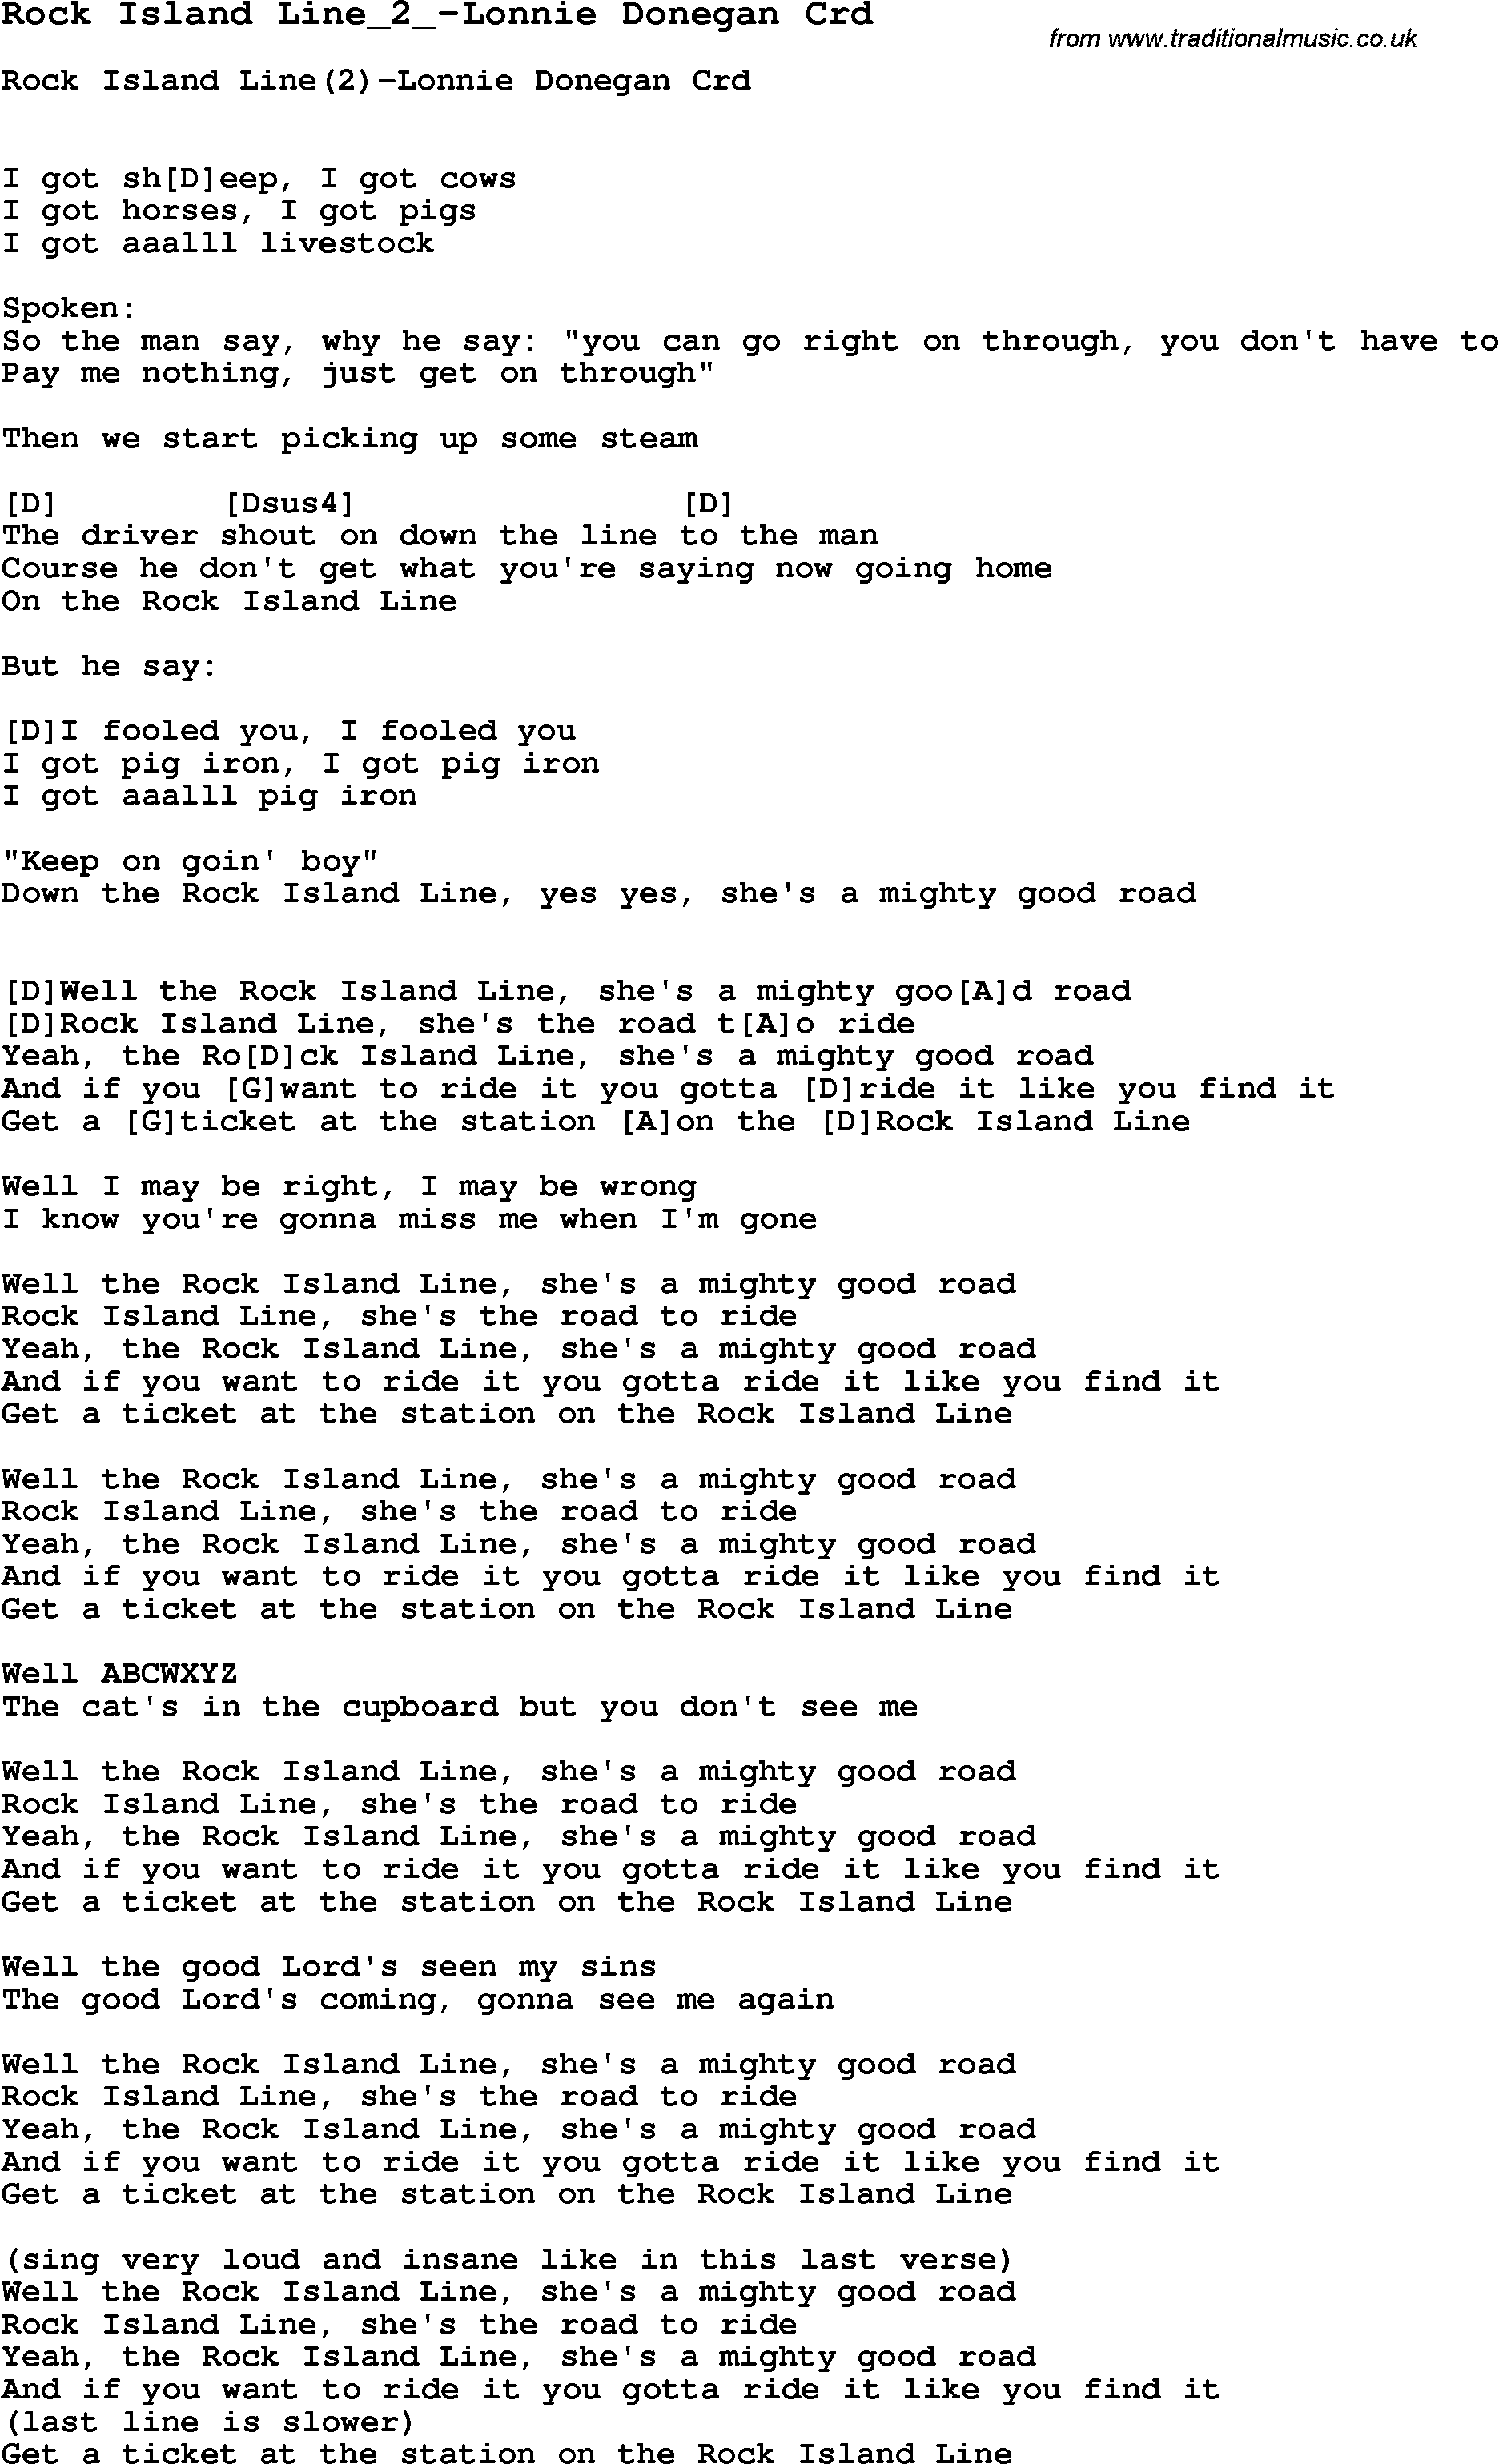 Skiffle Song Lyrics for Rock Island Line 2-Lonnie Donegan with chords for Mandolin, Ukulele, Guitar, Banjo etc.